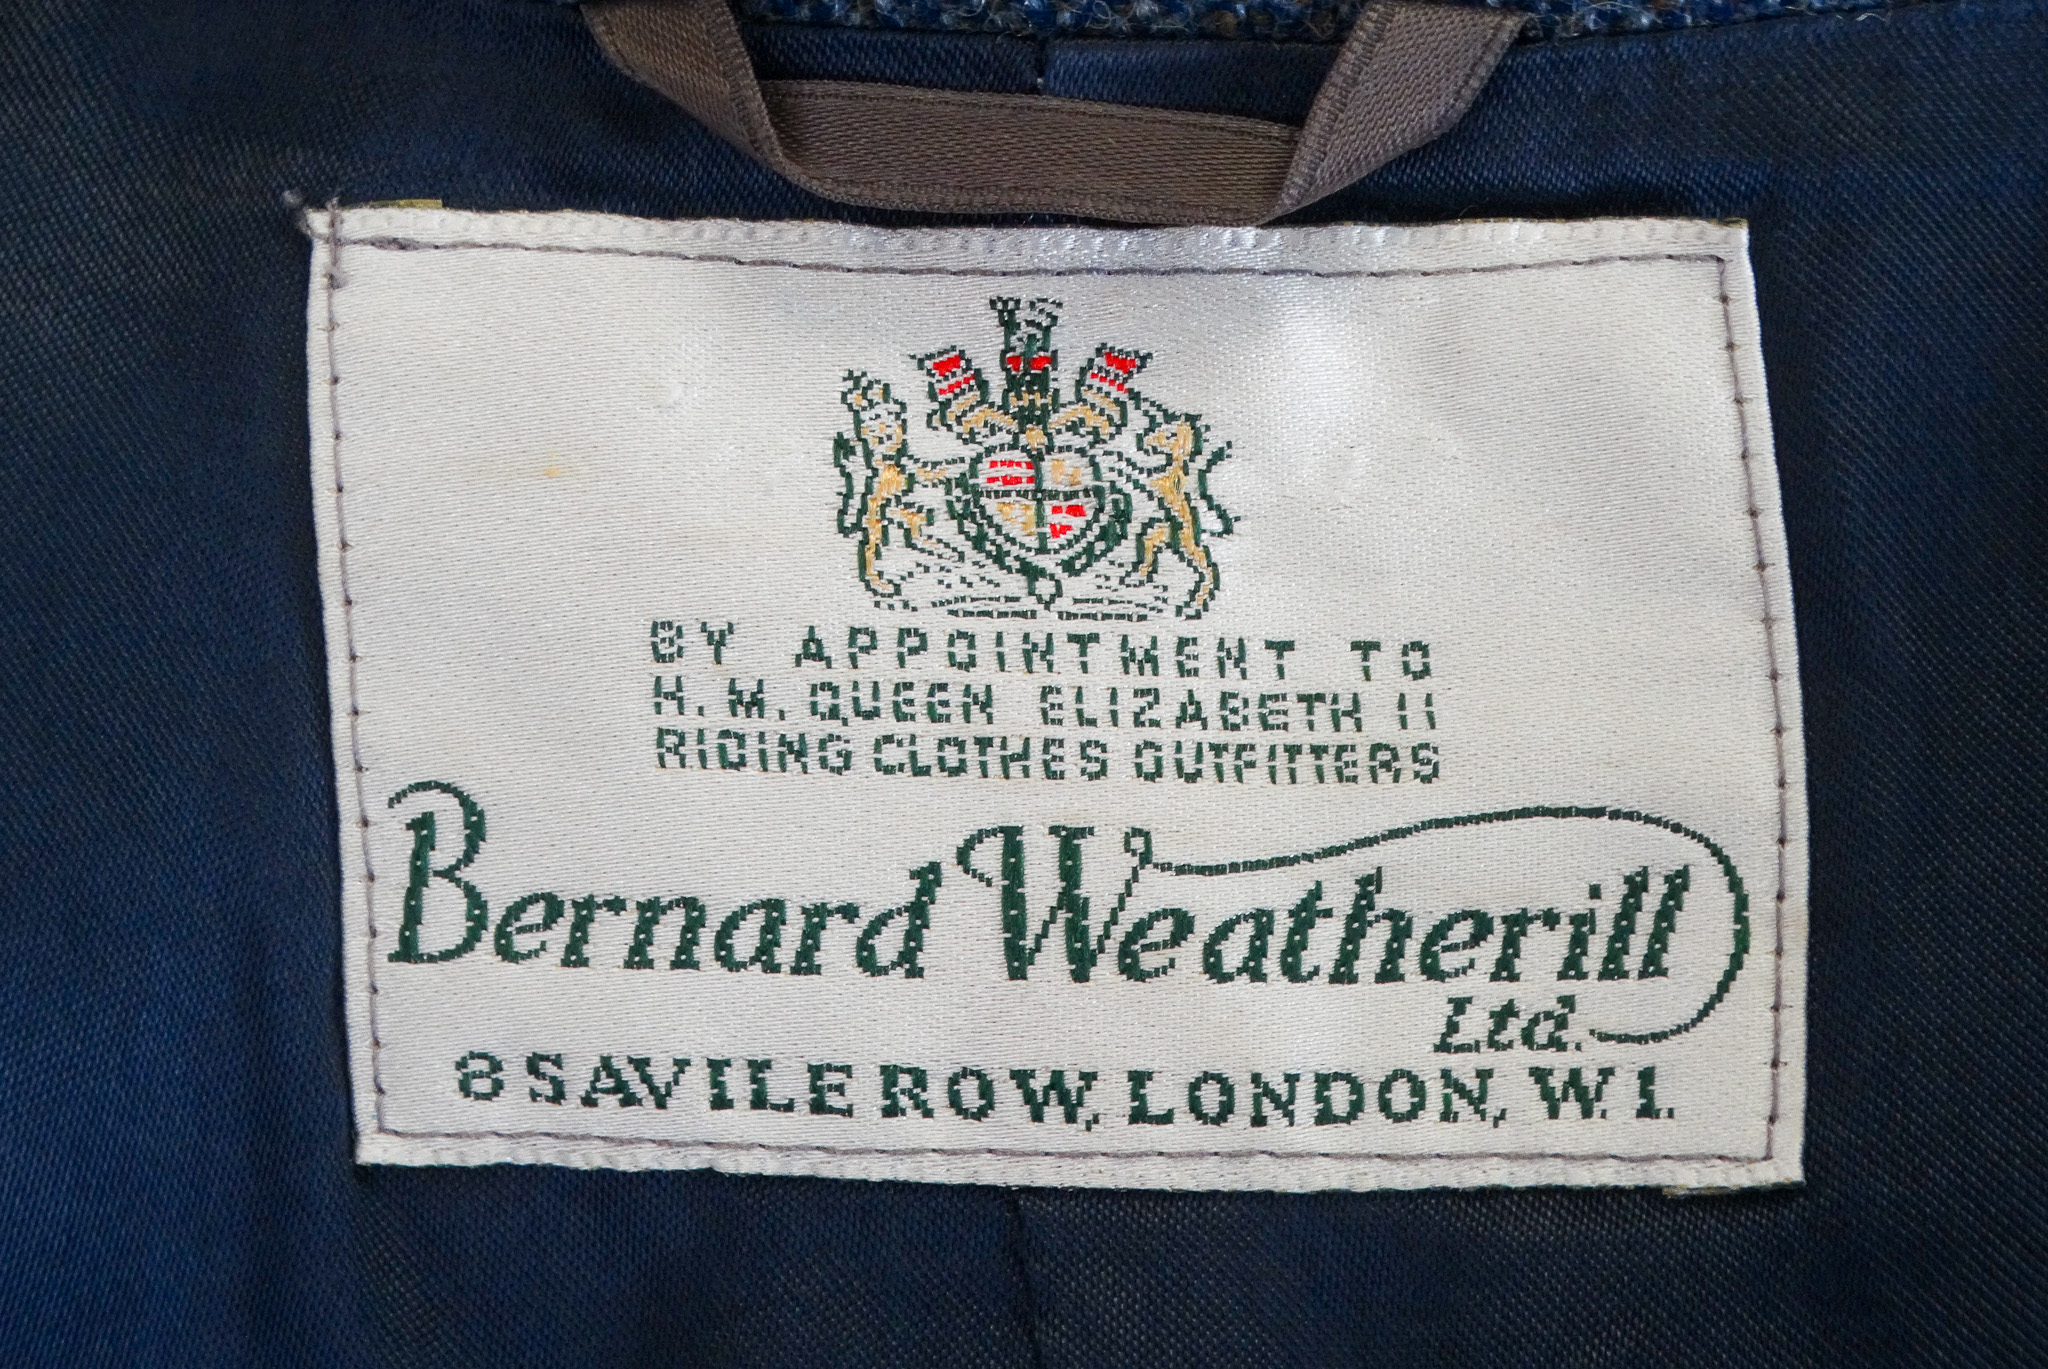 A ladies Tweed hacking jacket - Bernard Weatherill of Savile Row London, with blue velvet collar and - Image 7 of 7